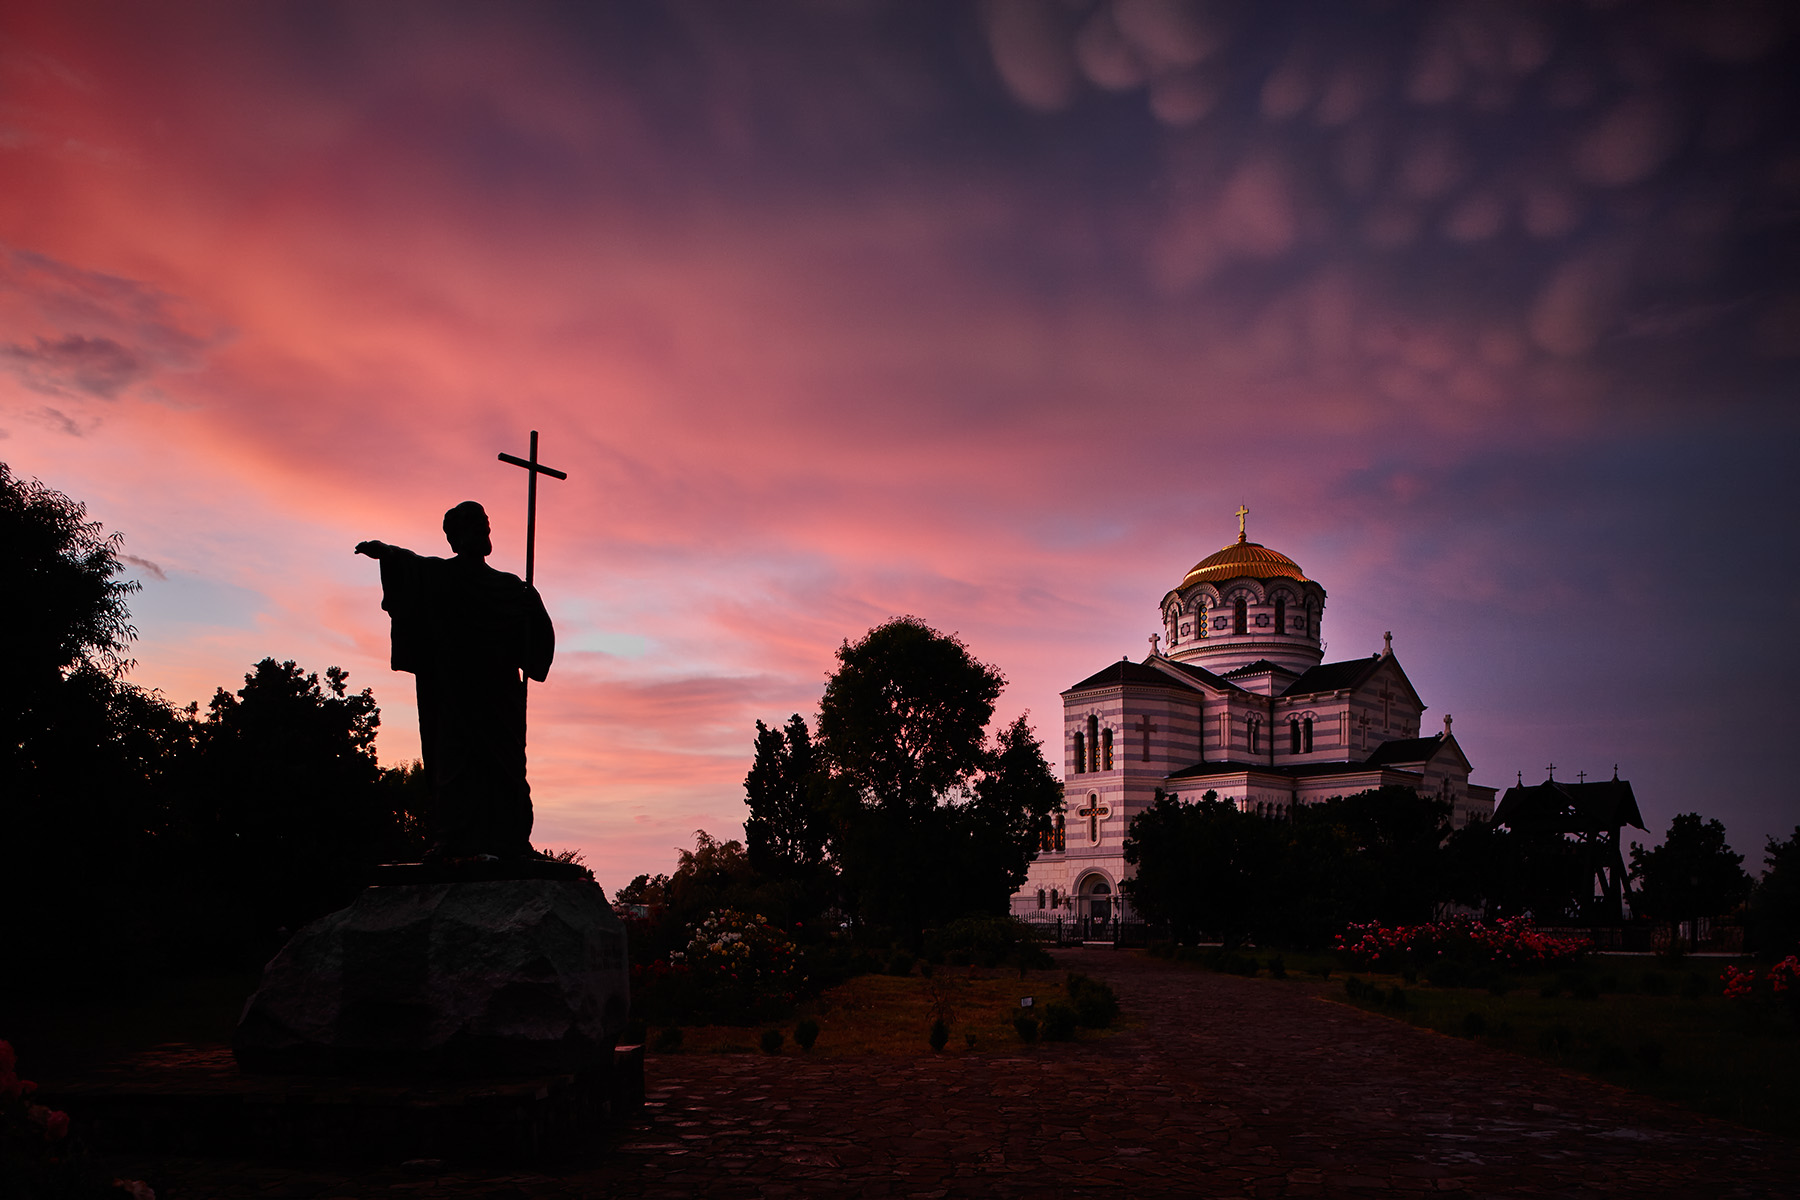 Chersonesus Cathedral - Crimea, Ukraine